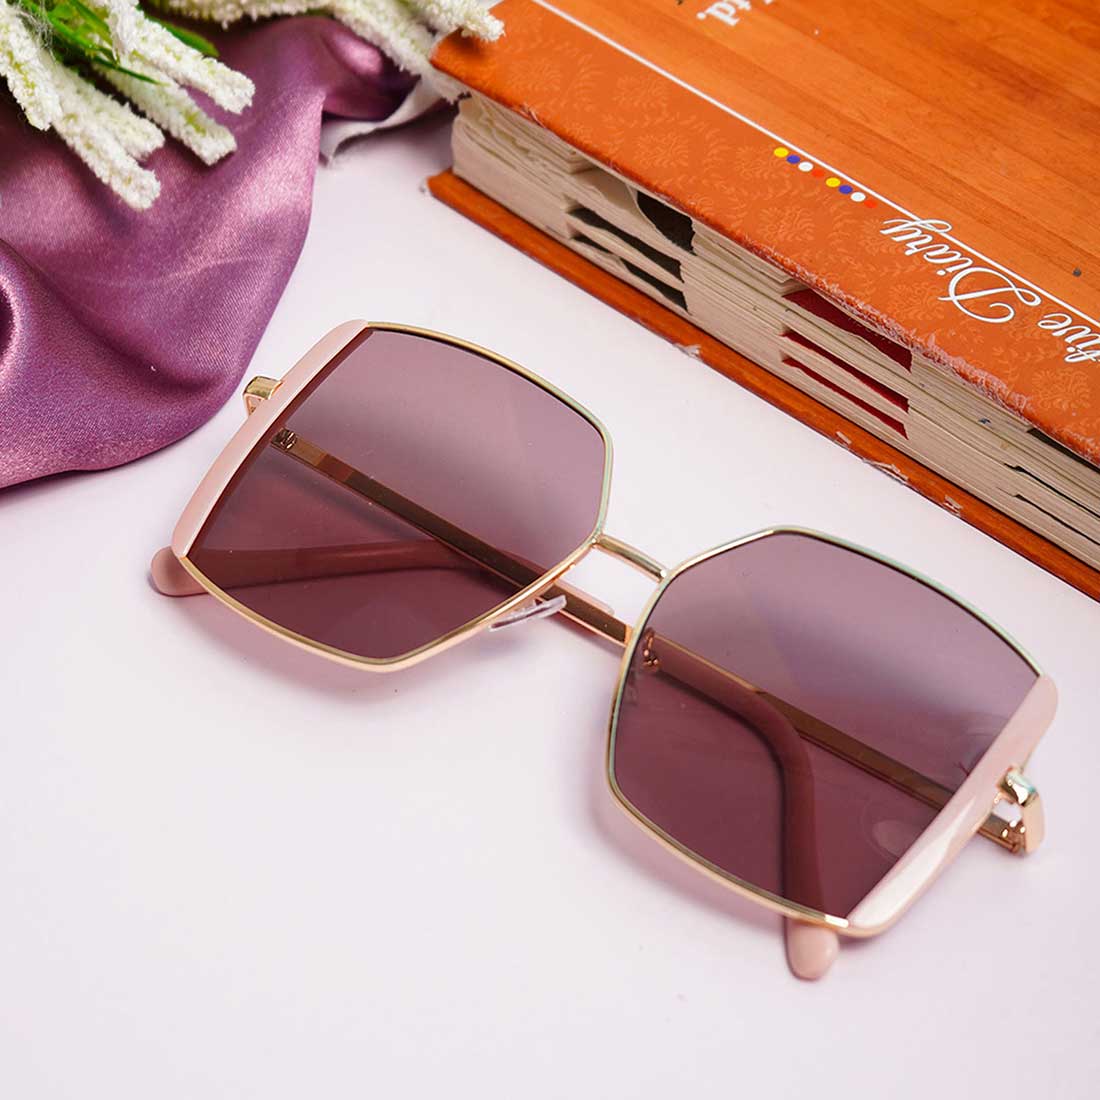 Purple oversize Sunglasses
"